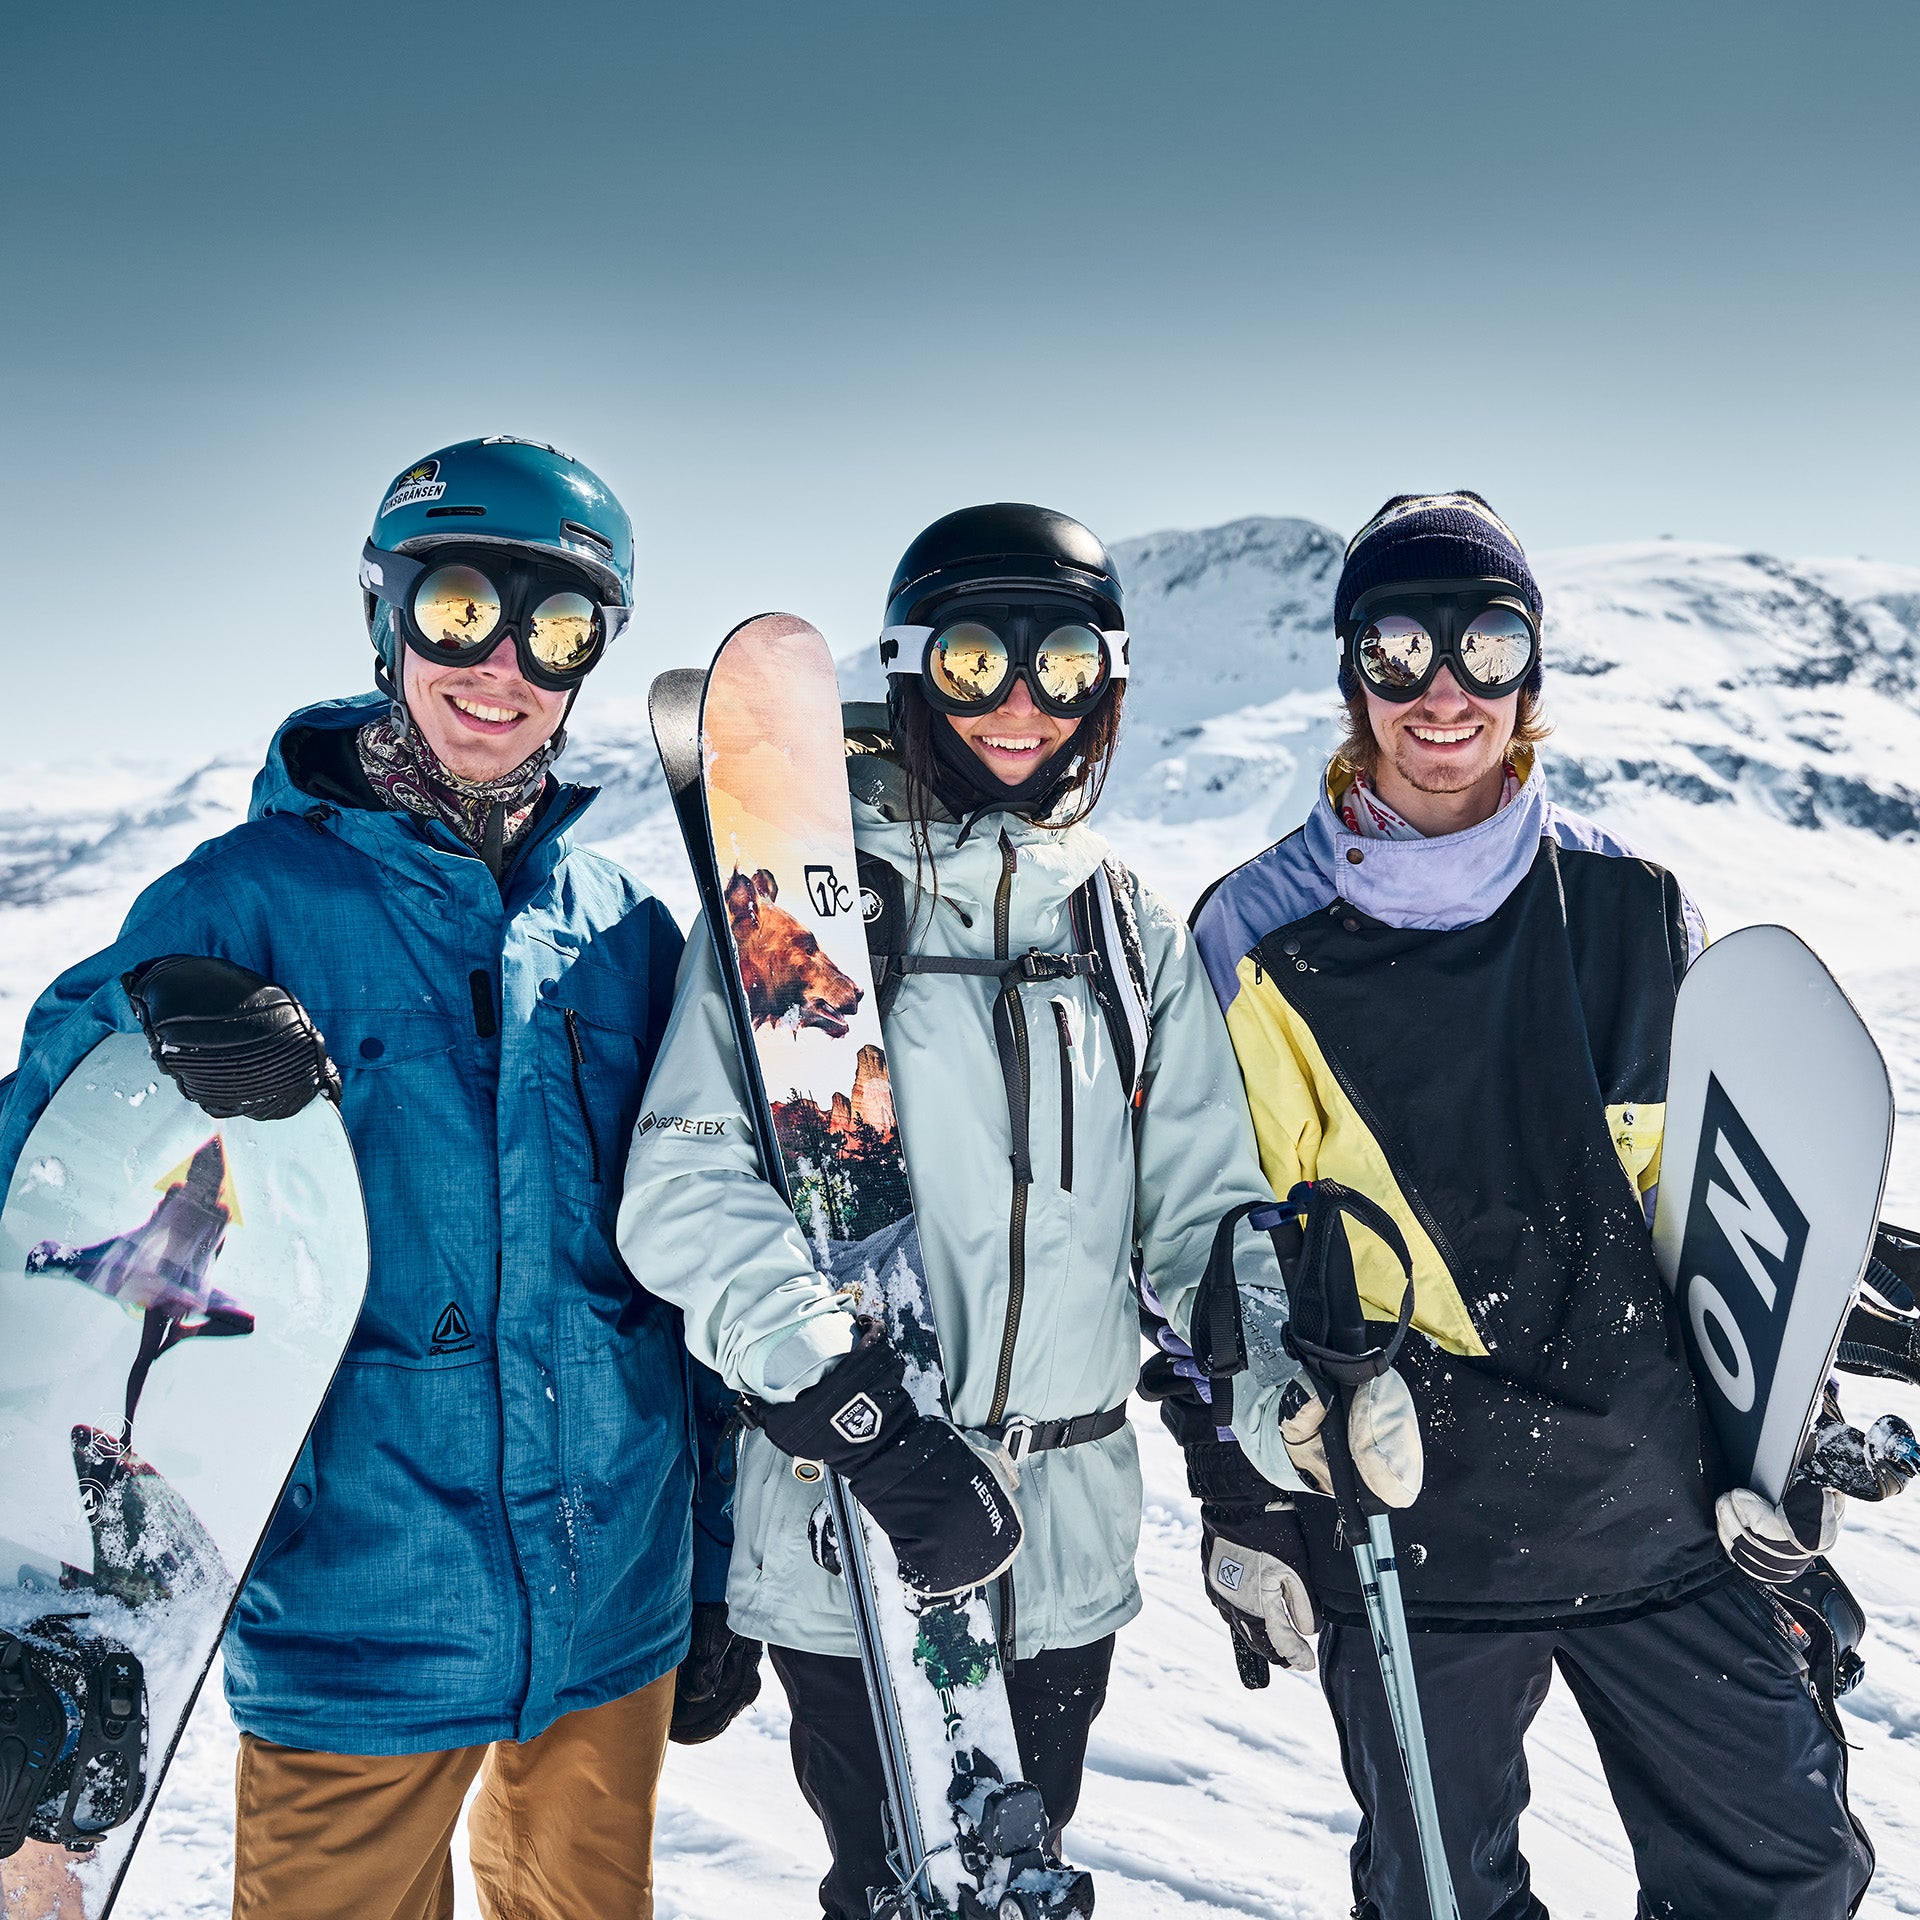 Winter Snow Sports Ski Snowboard Snowmobile MTB Face Mask Shield Goggles  Glasses